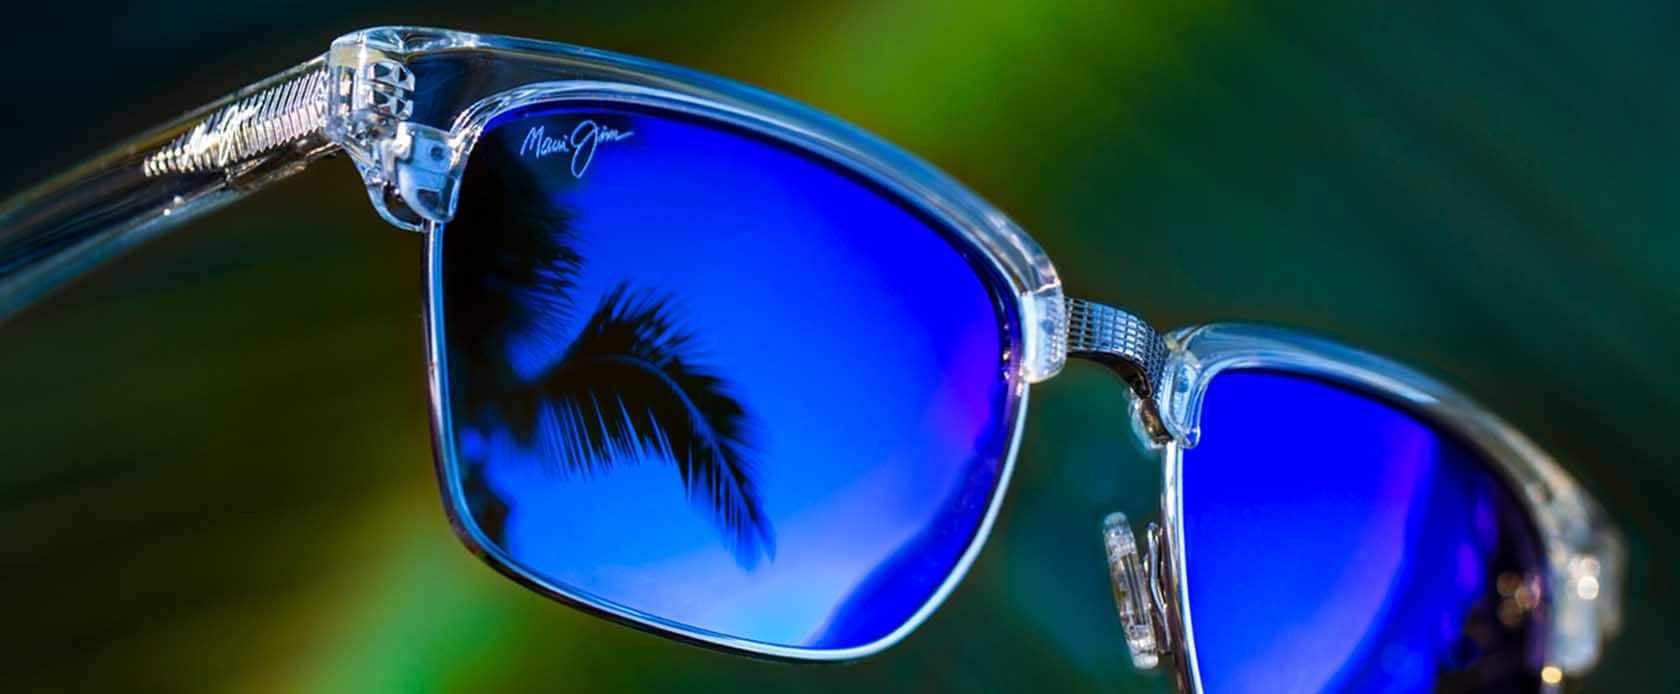 How To Clean Maui Jim Sunglasses?  